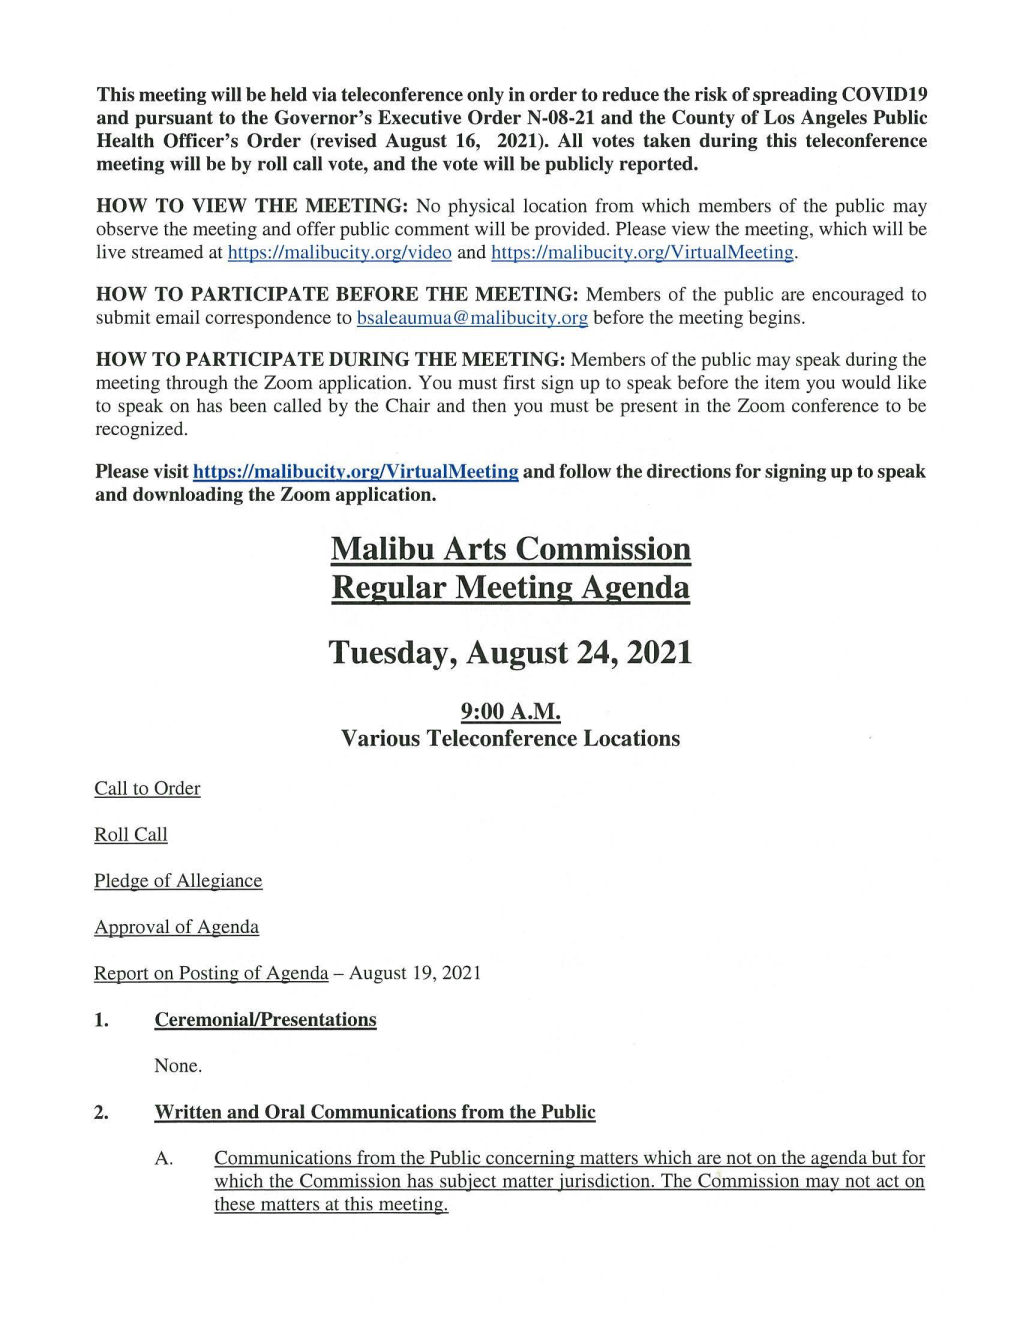 Malibu Arts Commission Regular Meeting Agenda Tuesday, August 24, 2021